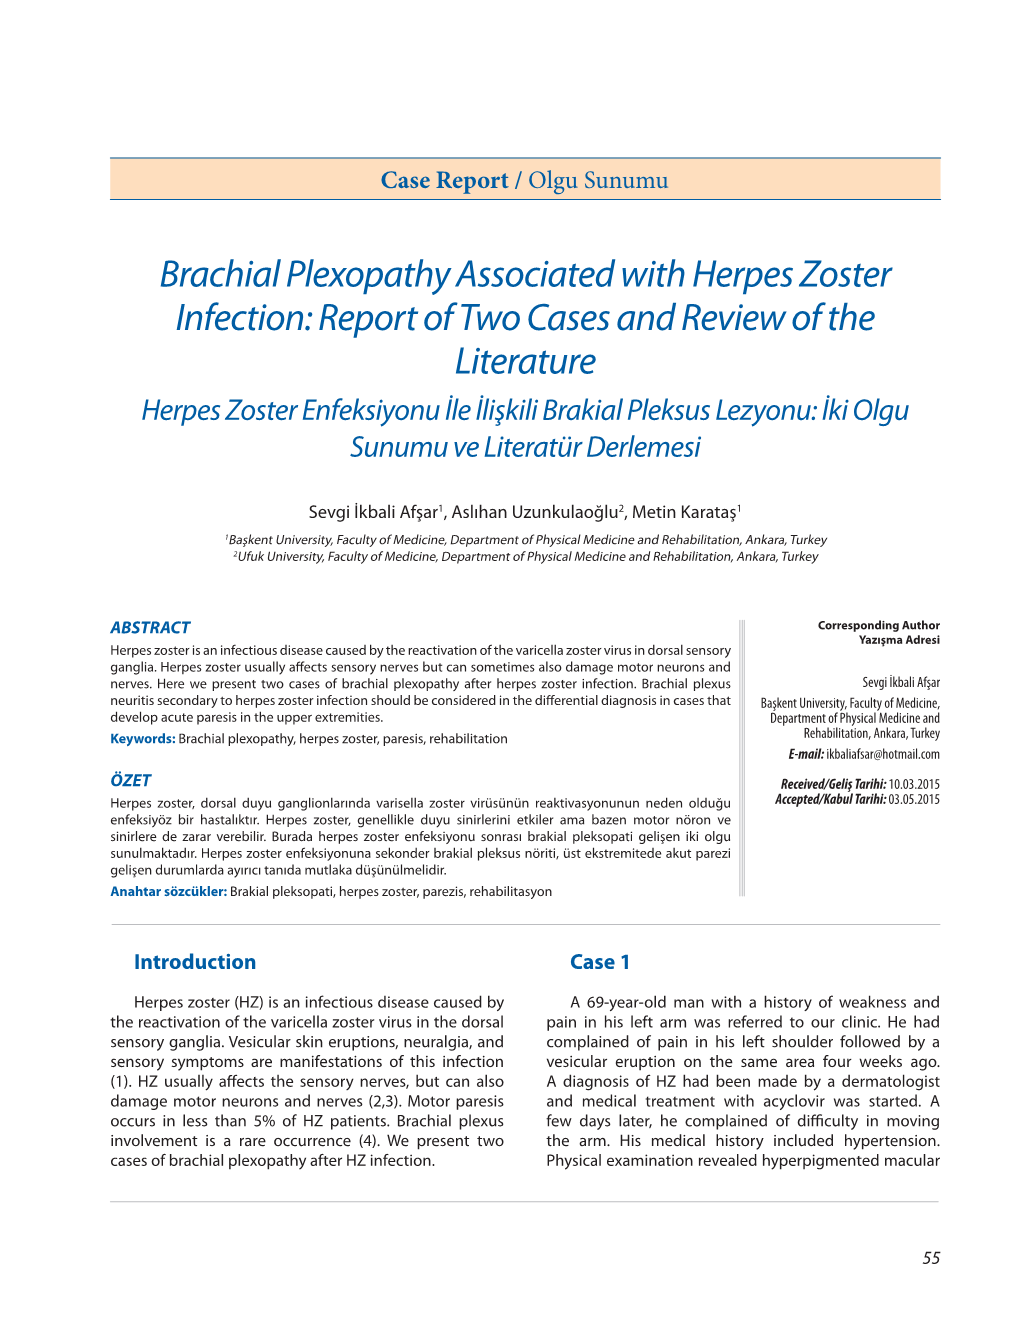 Brachial Plexopathy Associated with Herpes Zoster Infection